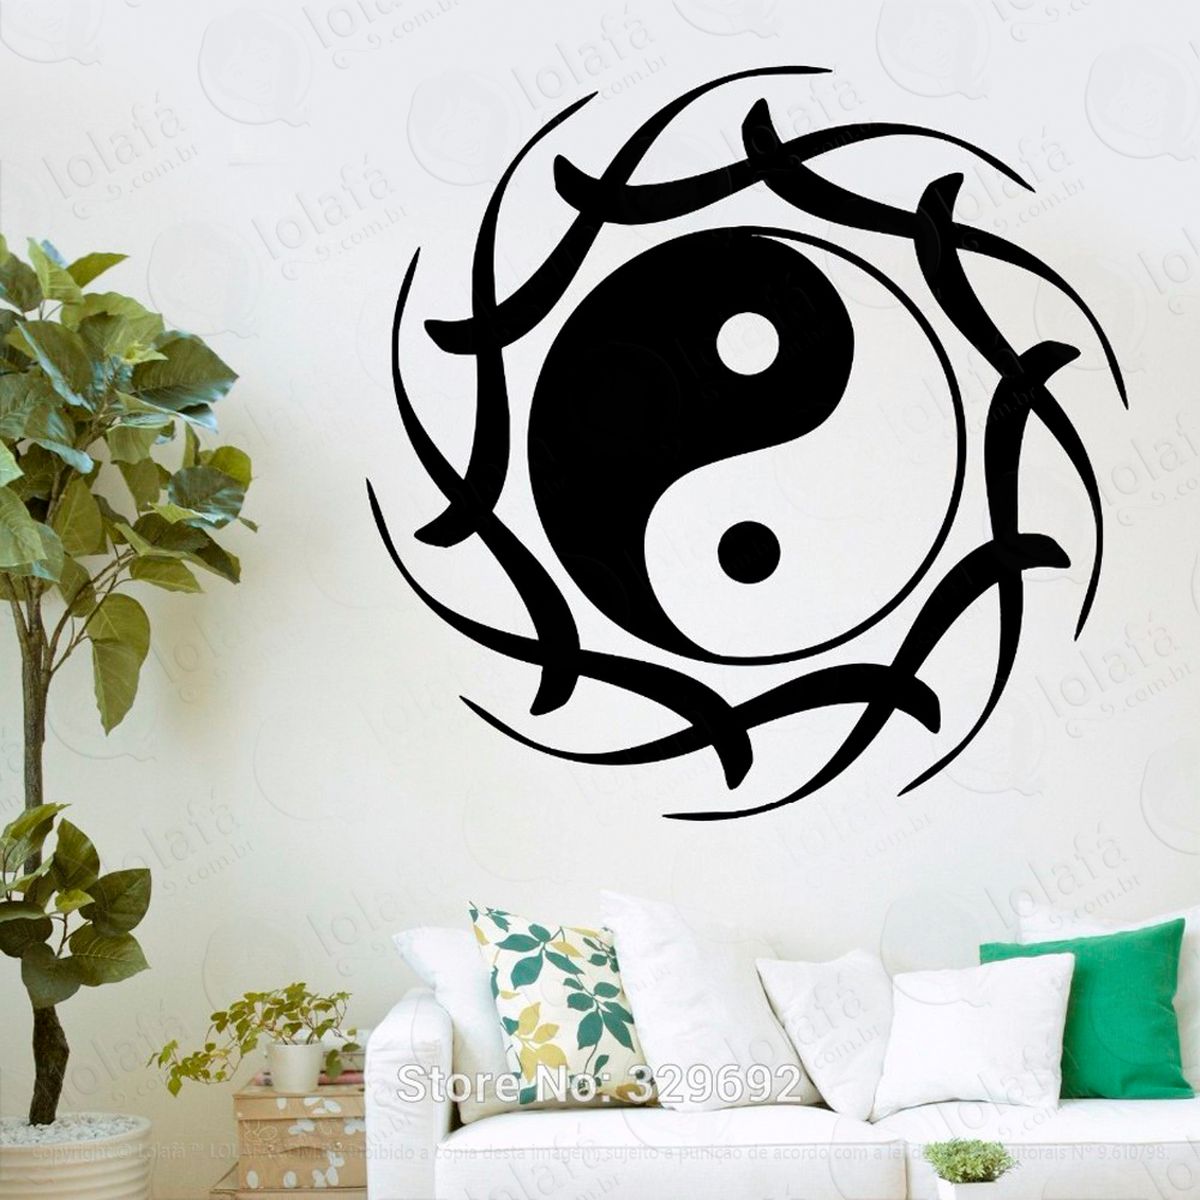 yin-yang tribal adesivo de parede decorativo para casa, sala, quarto e vidro - mod:102